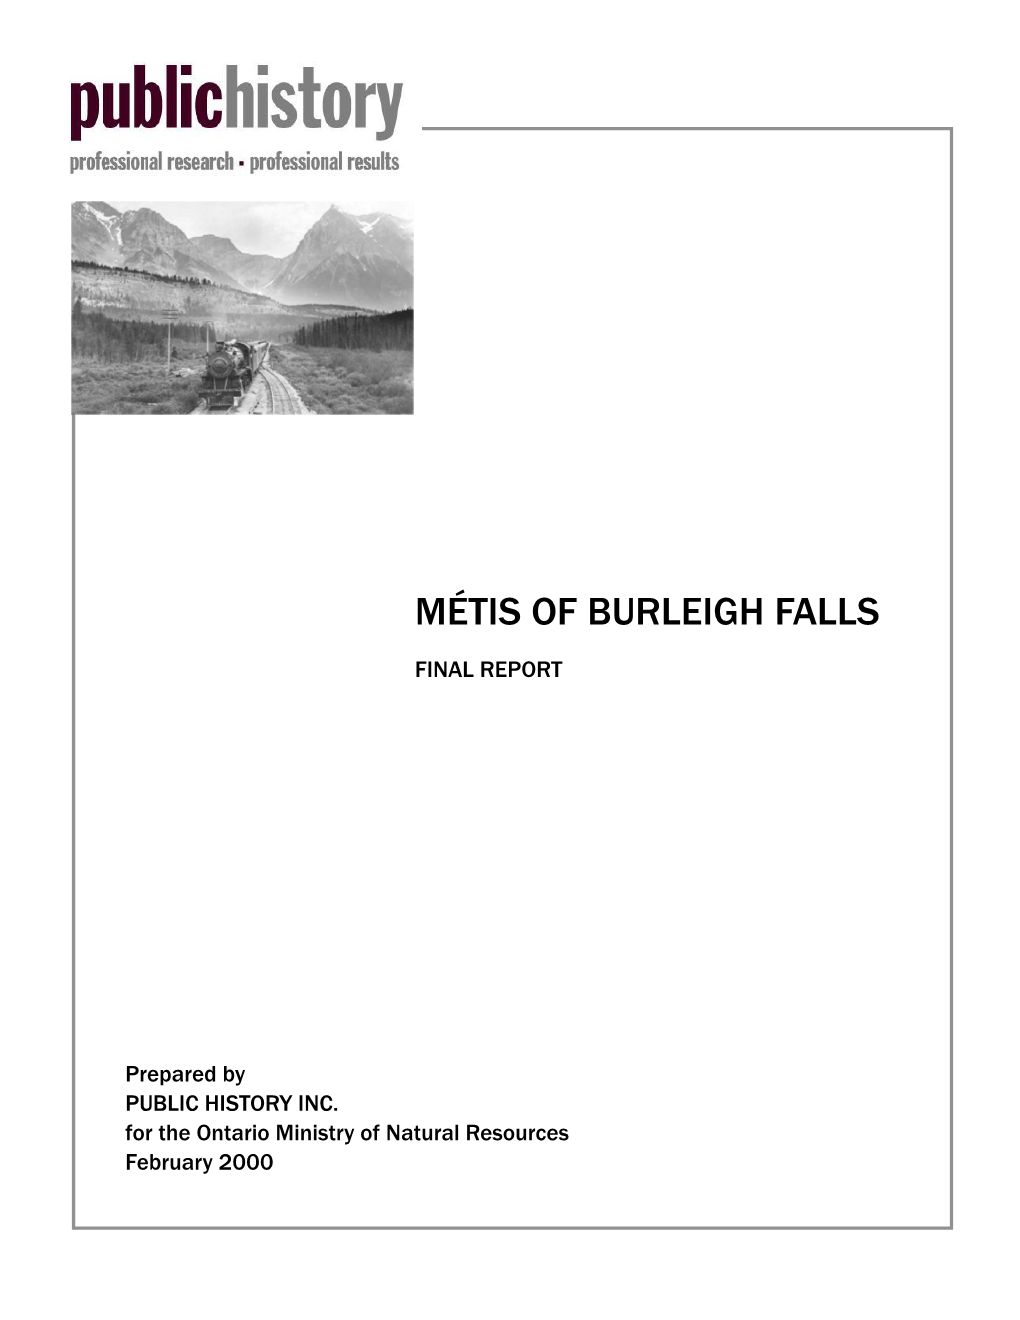 Burleigh Falls